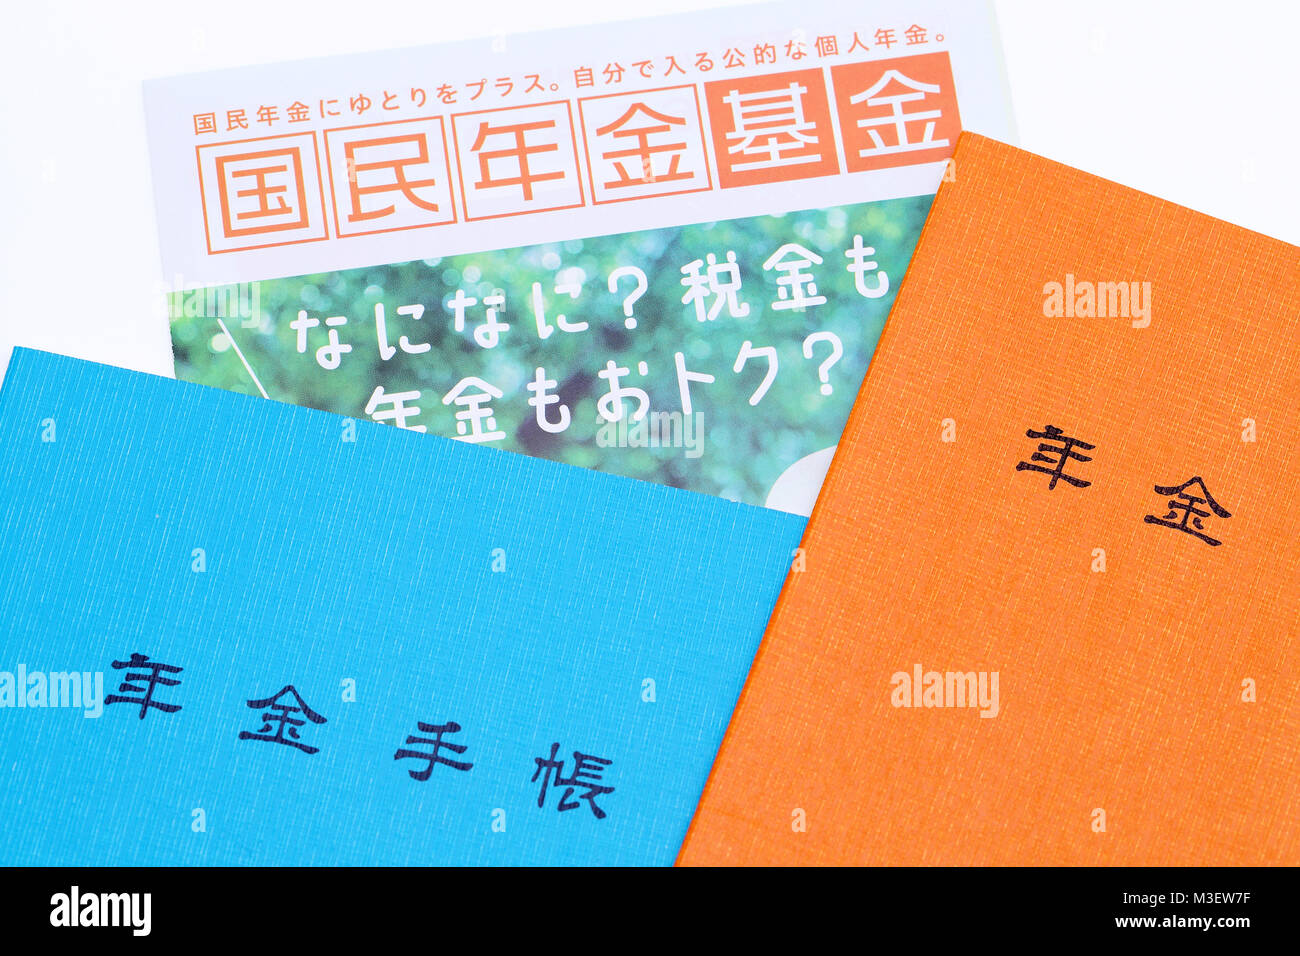 Japanese national pension plan handbook on white background Stock Photo